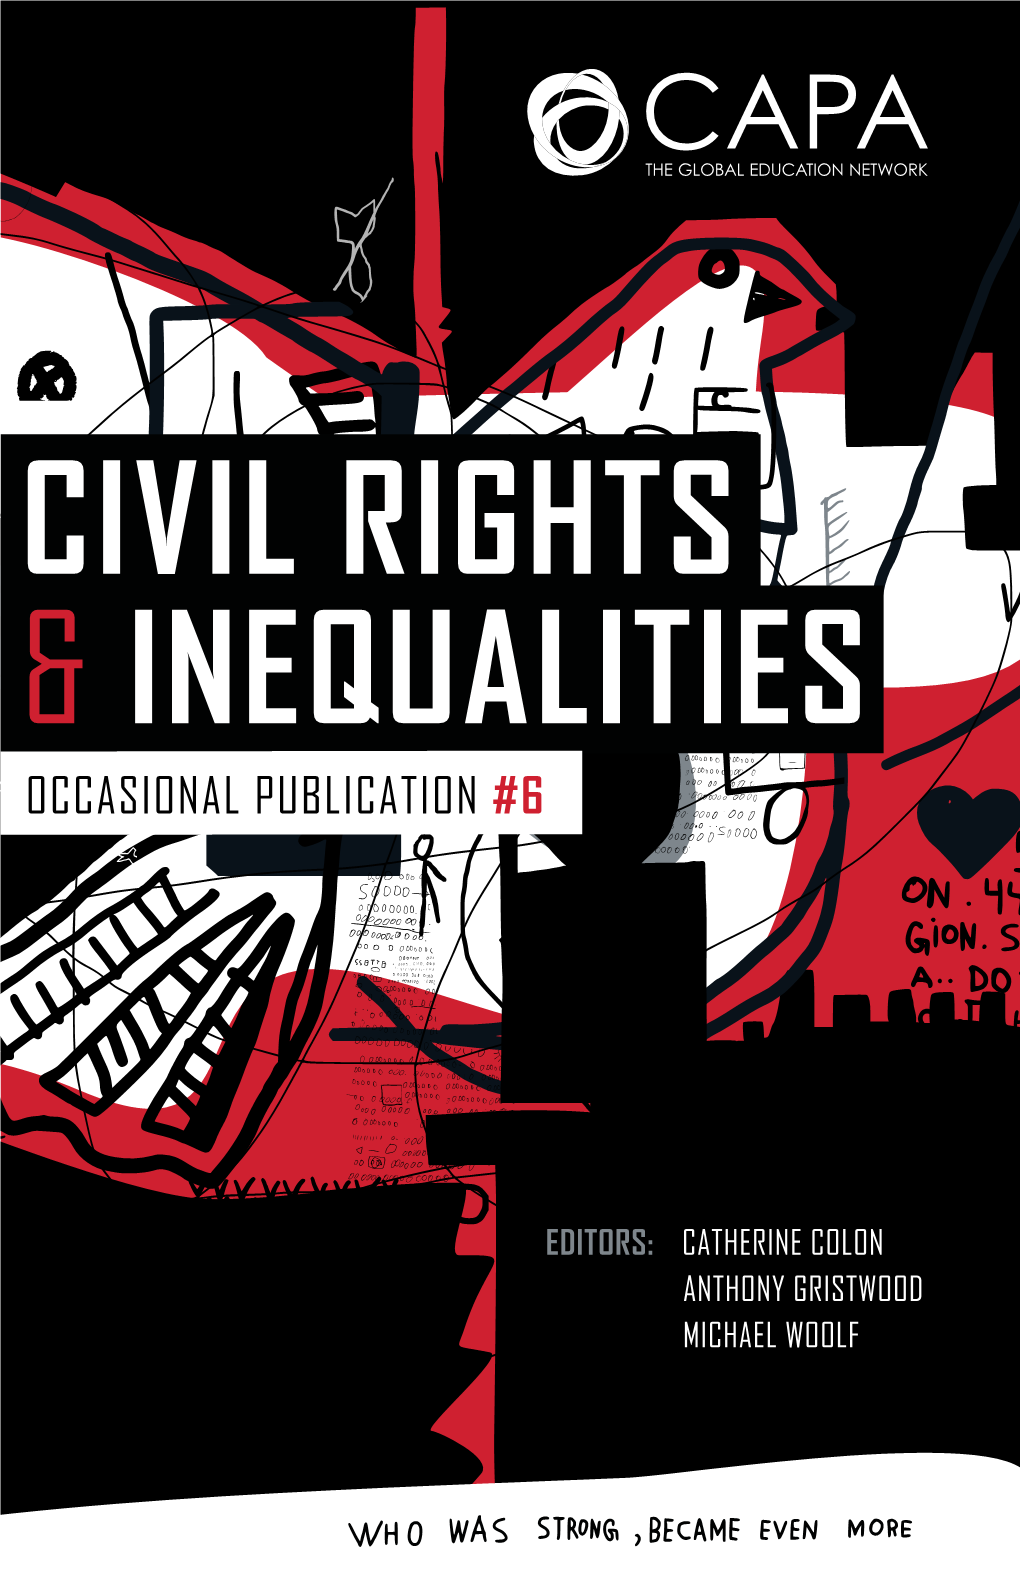 Civil Rights & Inequalities